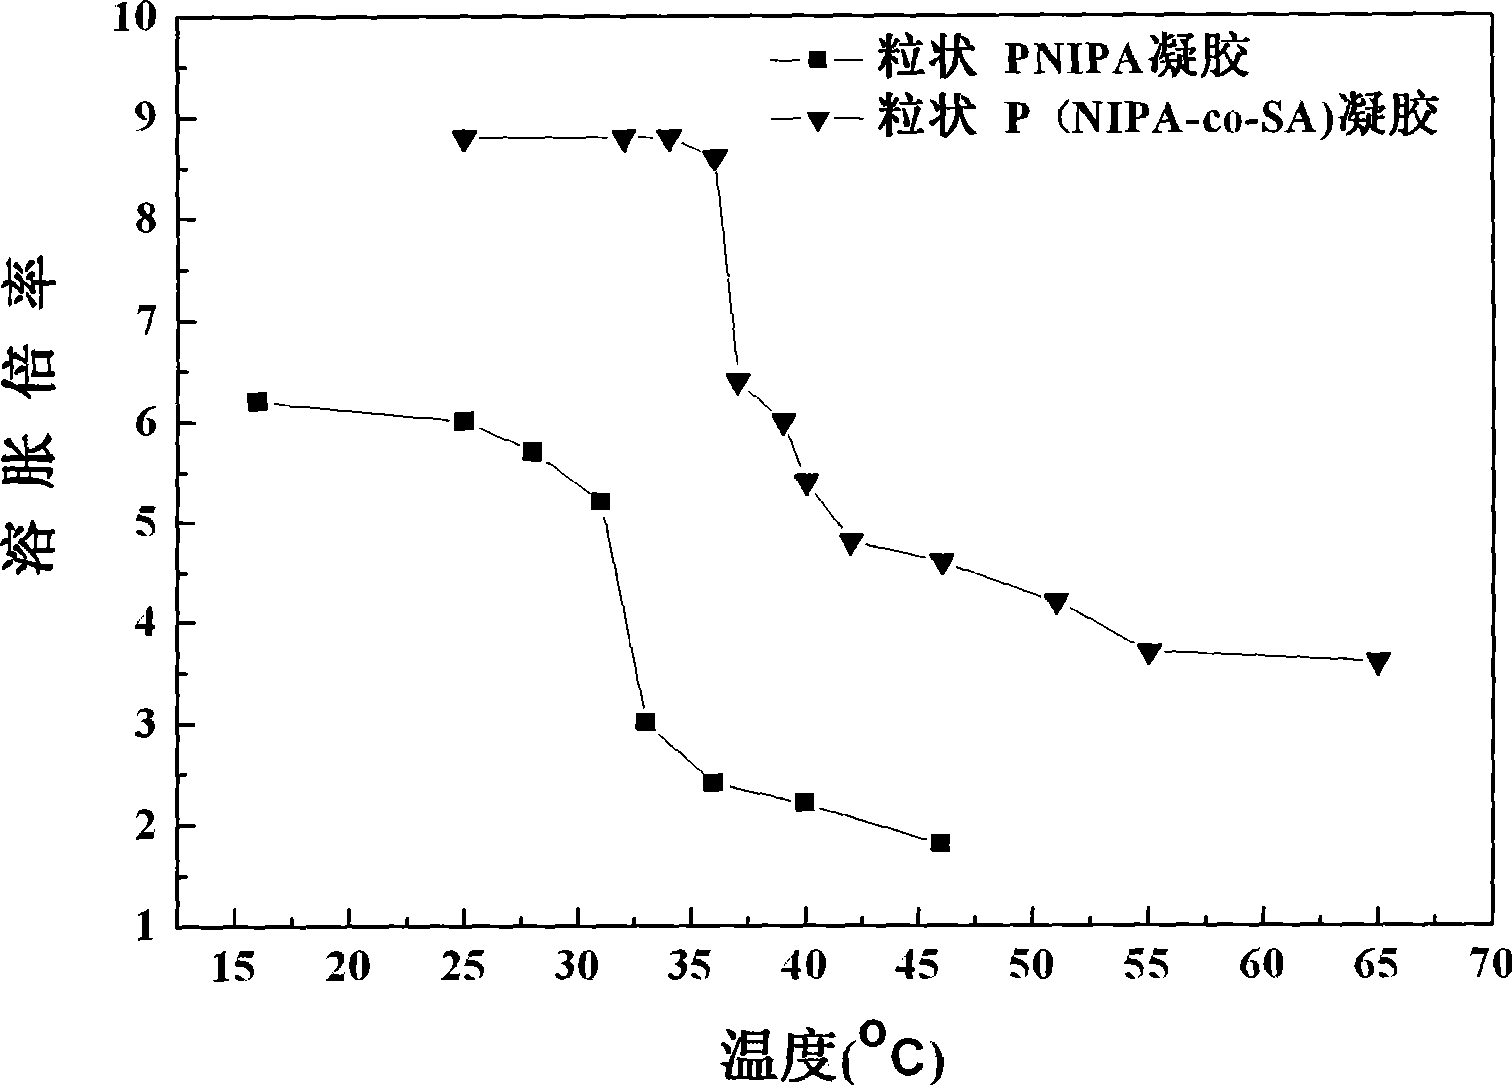 Method for assisting lysozyme renaturation in vitro by granular poly(N-isopropylacrylicamide-sodium acrylate) copolymer hydrogel